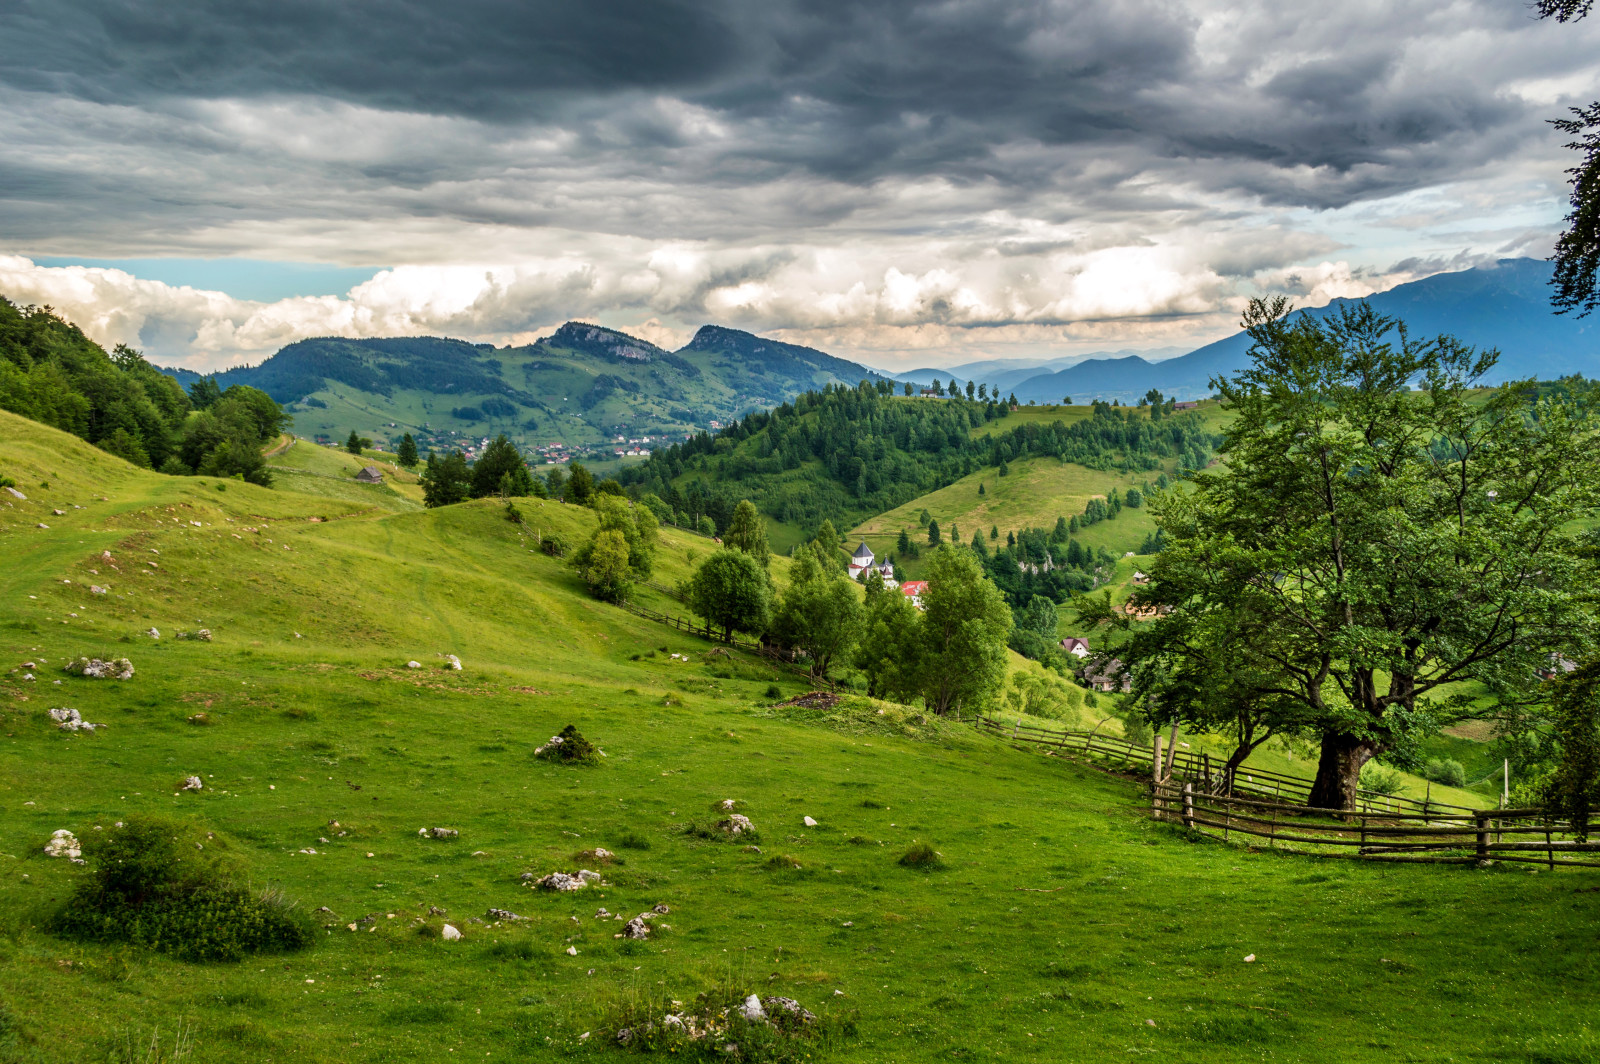 rumput, pohon, sayuran hijau, bidang, awan, gunung, Rumania, padang rumput